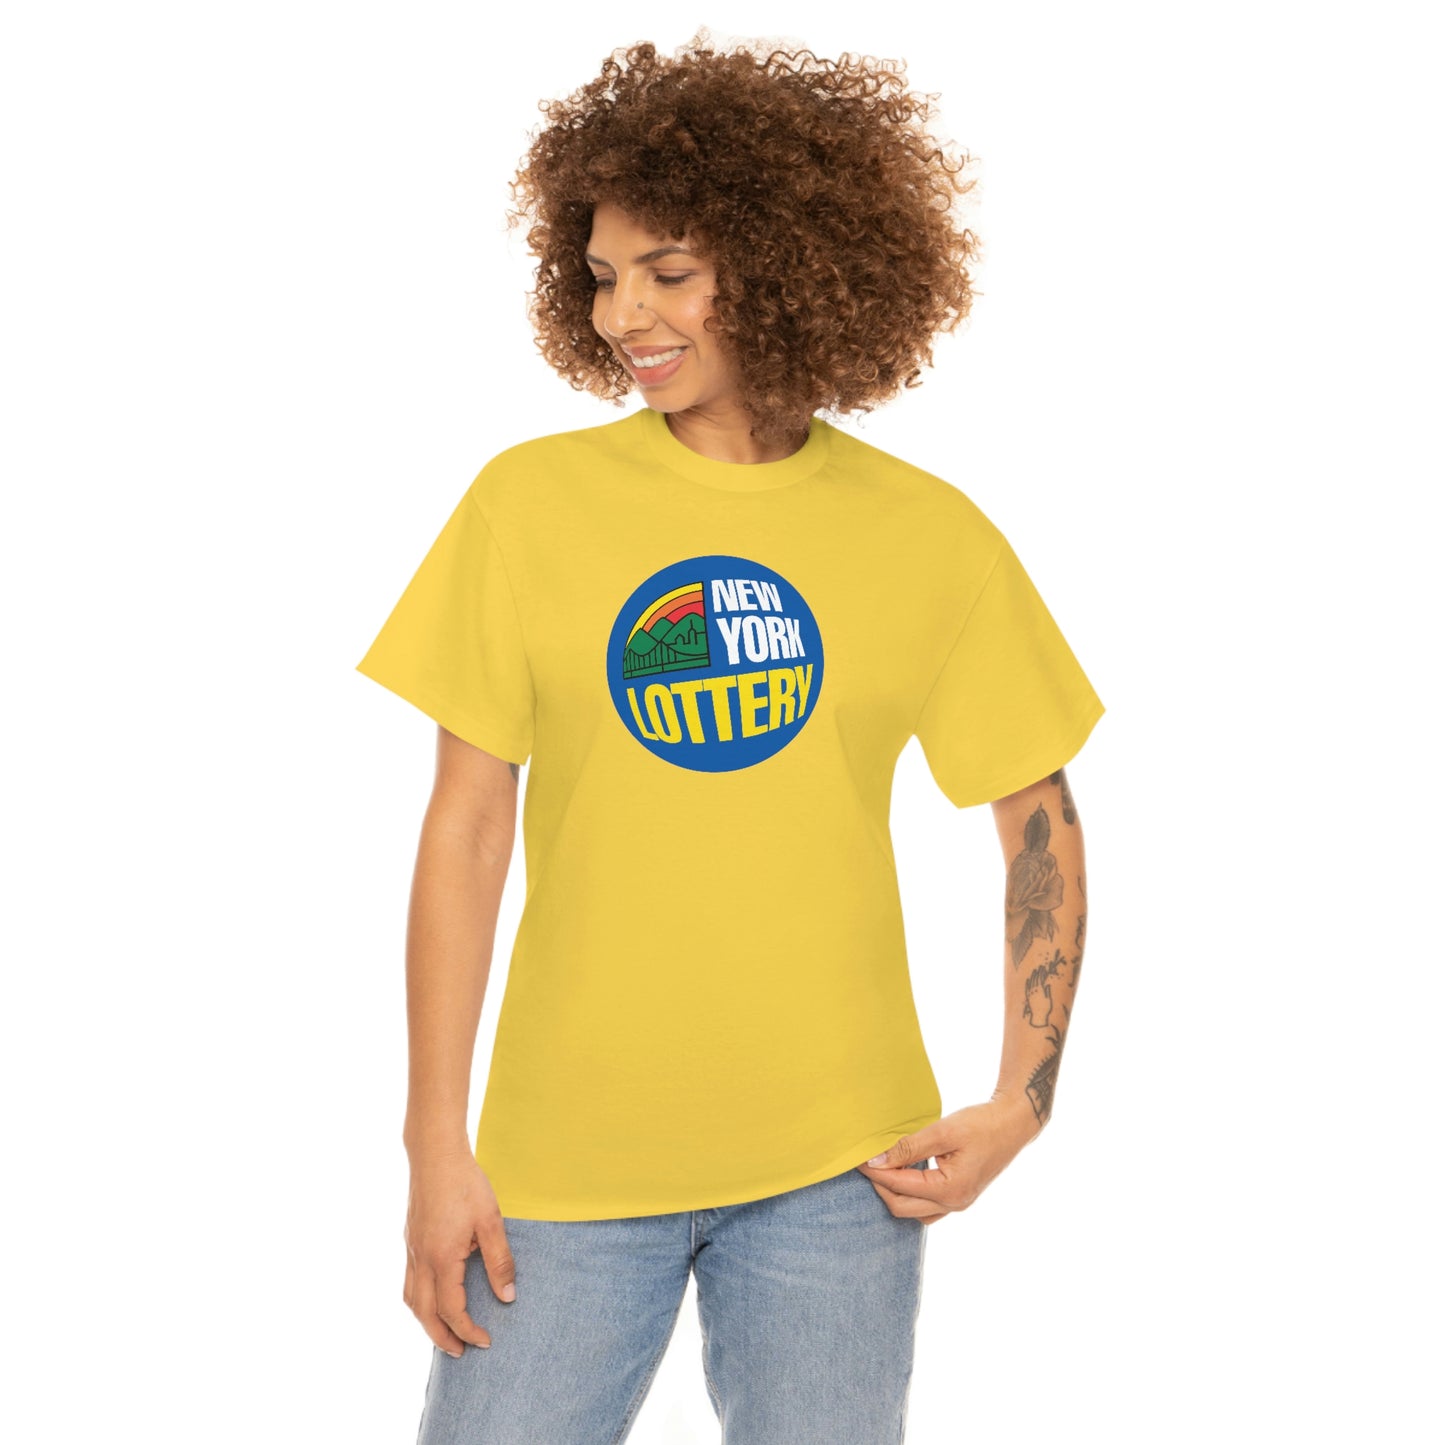 New York Lottery T-Shirt